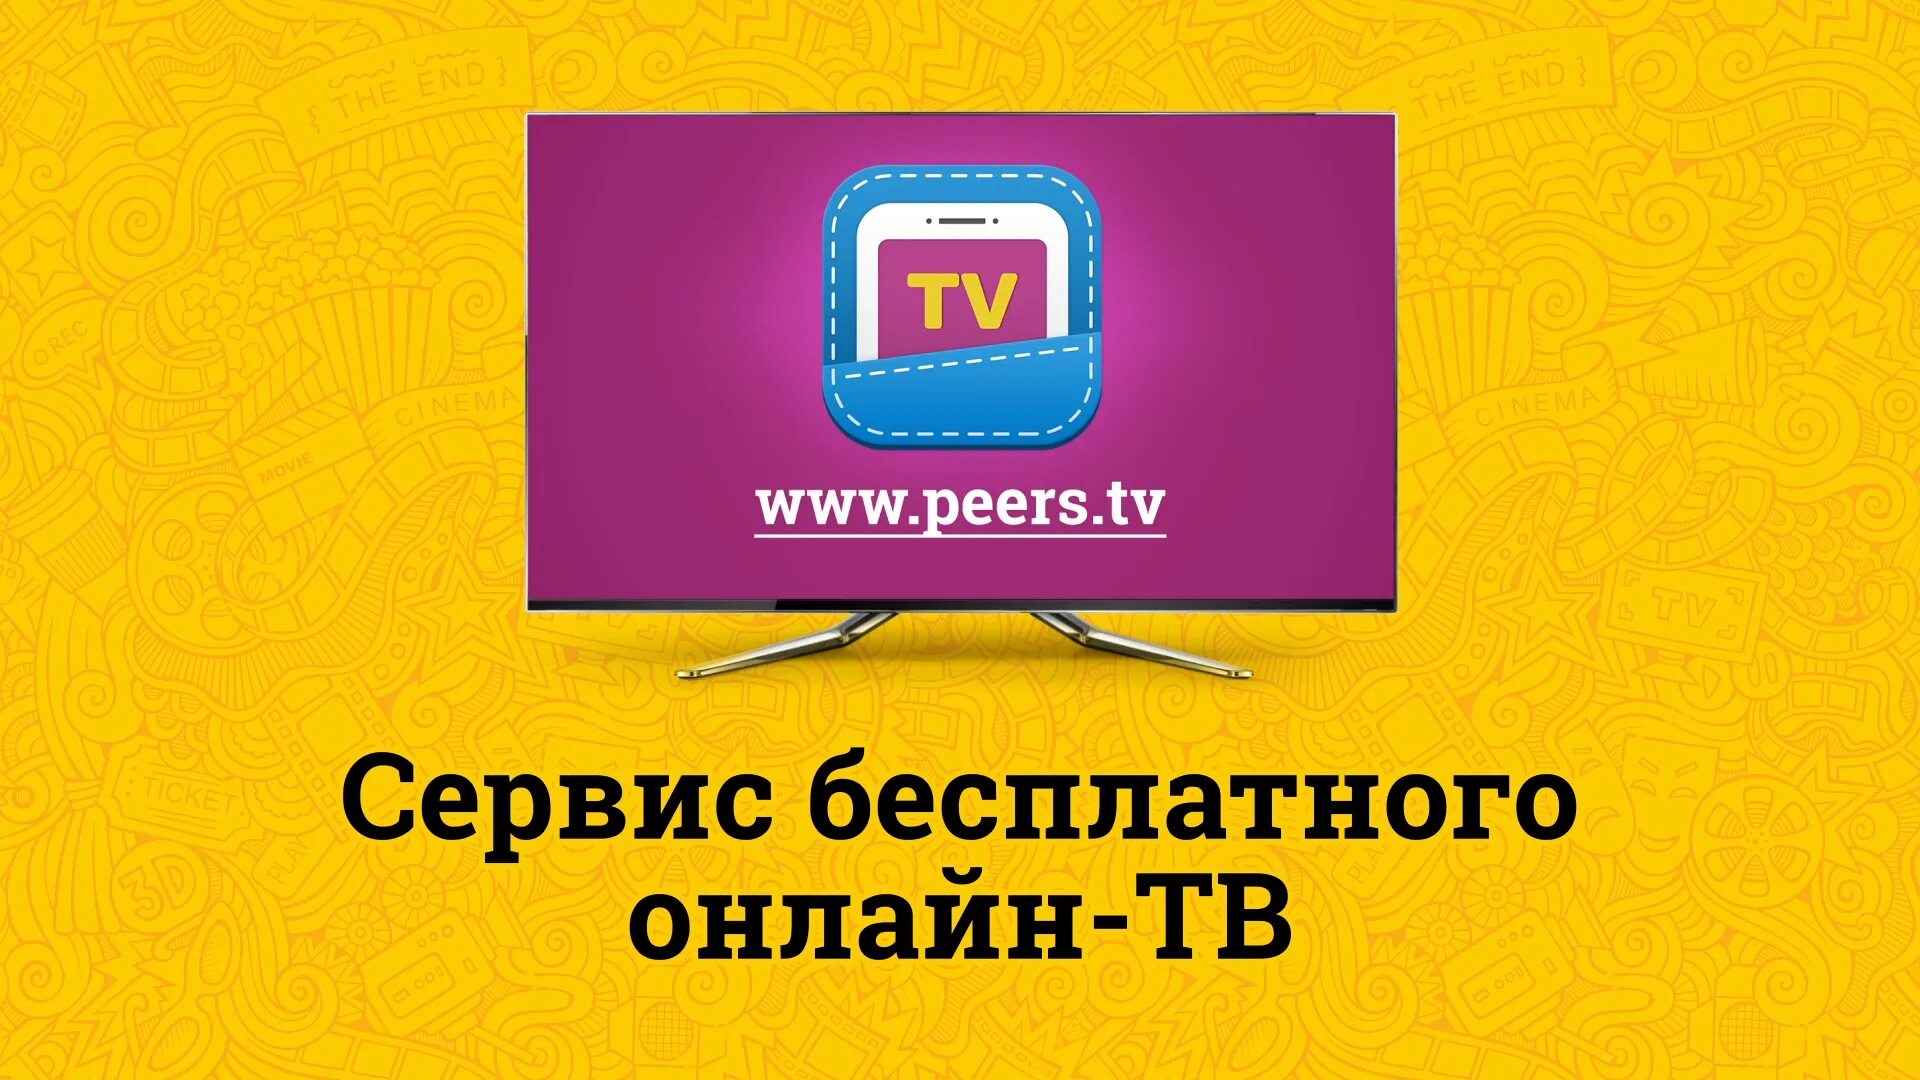 Peers для смарт. Peers TV. Peers TV логотип. Перс ТВ. Пирс ТВ каналы.